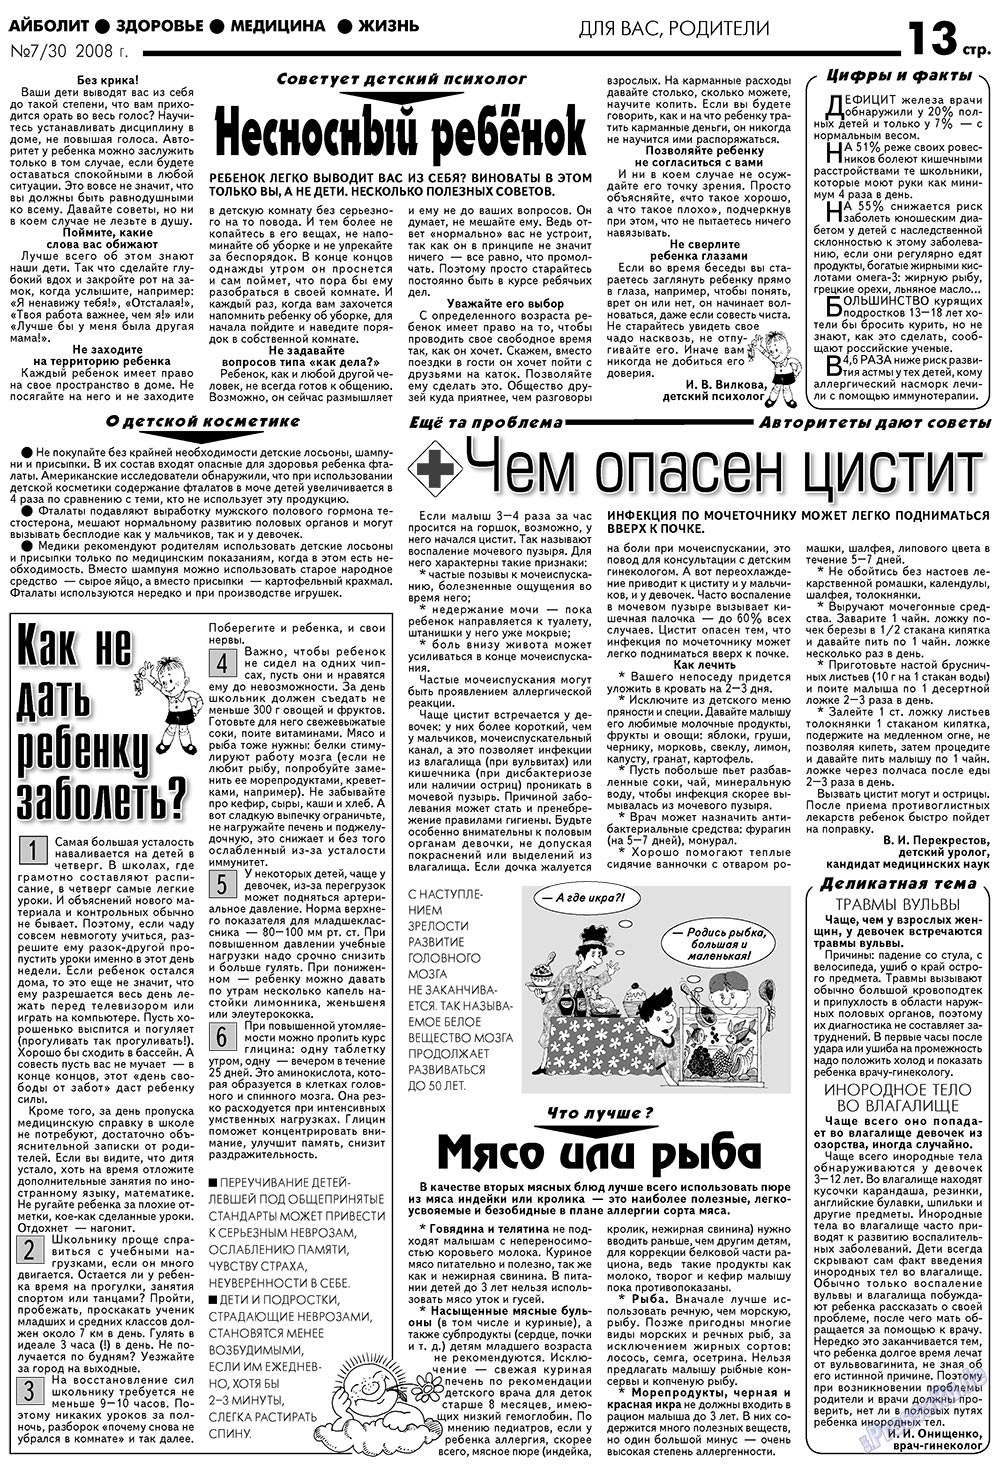 АйБолит (газета). 2008 год, номер 7, стр. 13